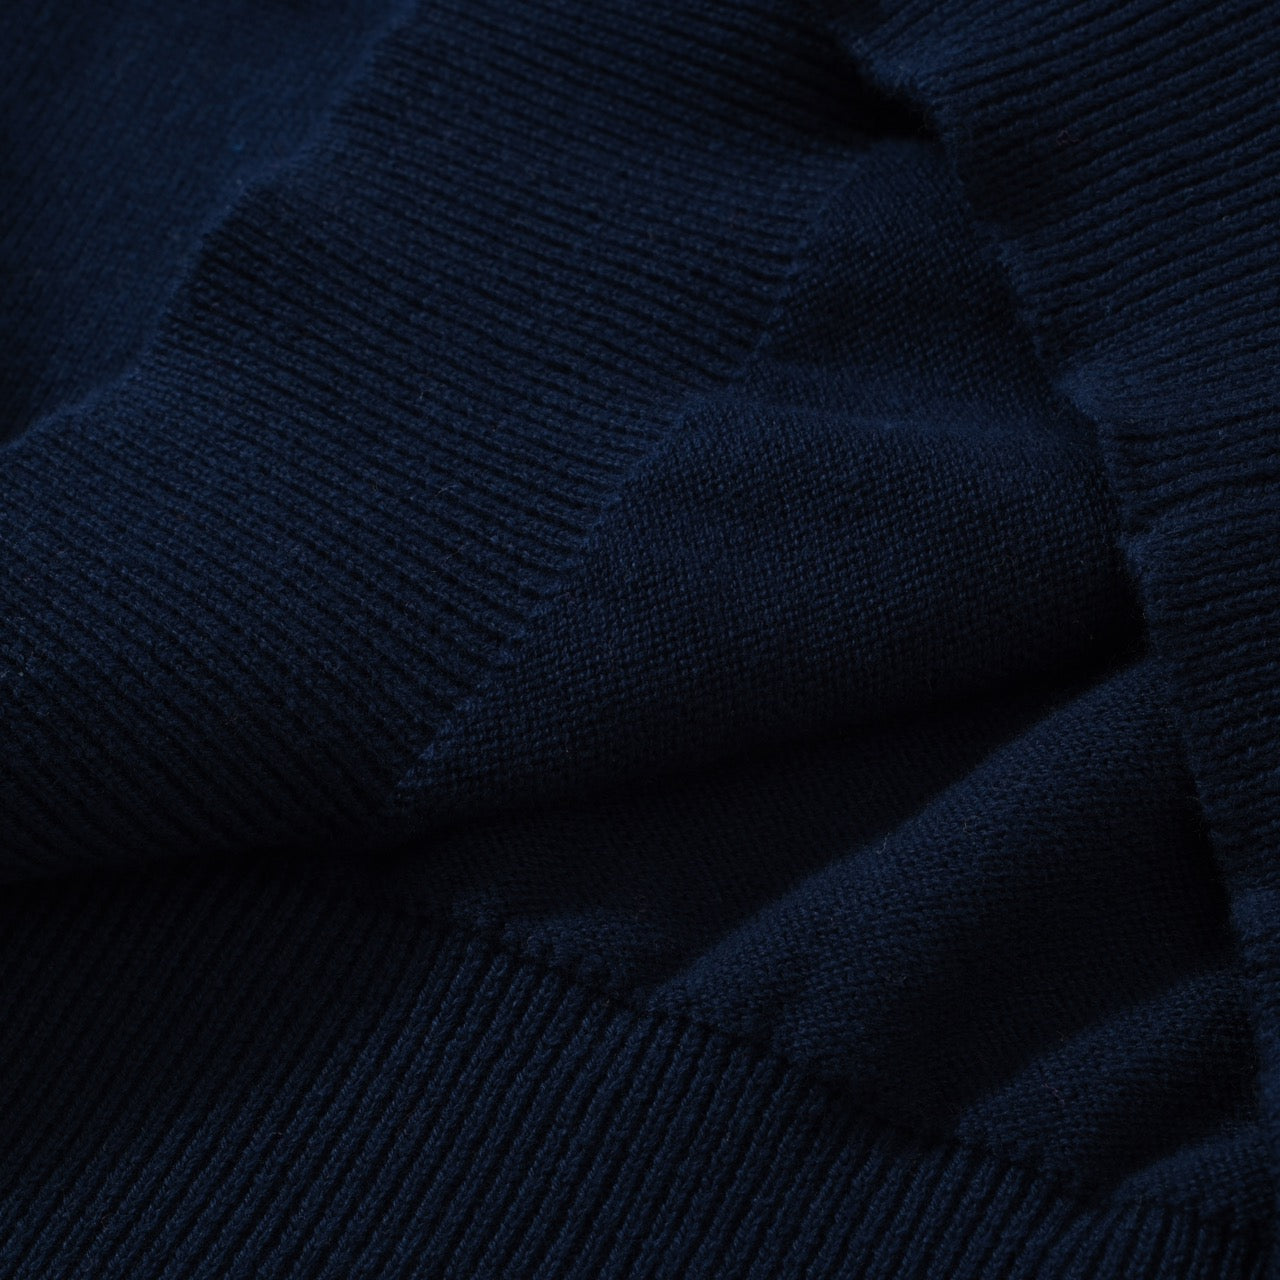 OXKNIT Women Vintage Clothing 1960s Mod Style Casual Rainbow Stripe Knit Dark Blue Retro T-shirts